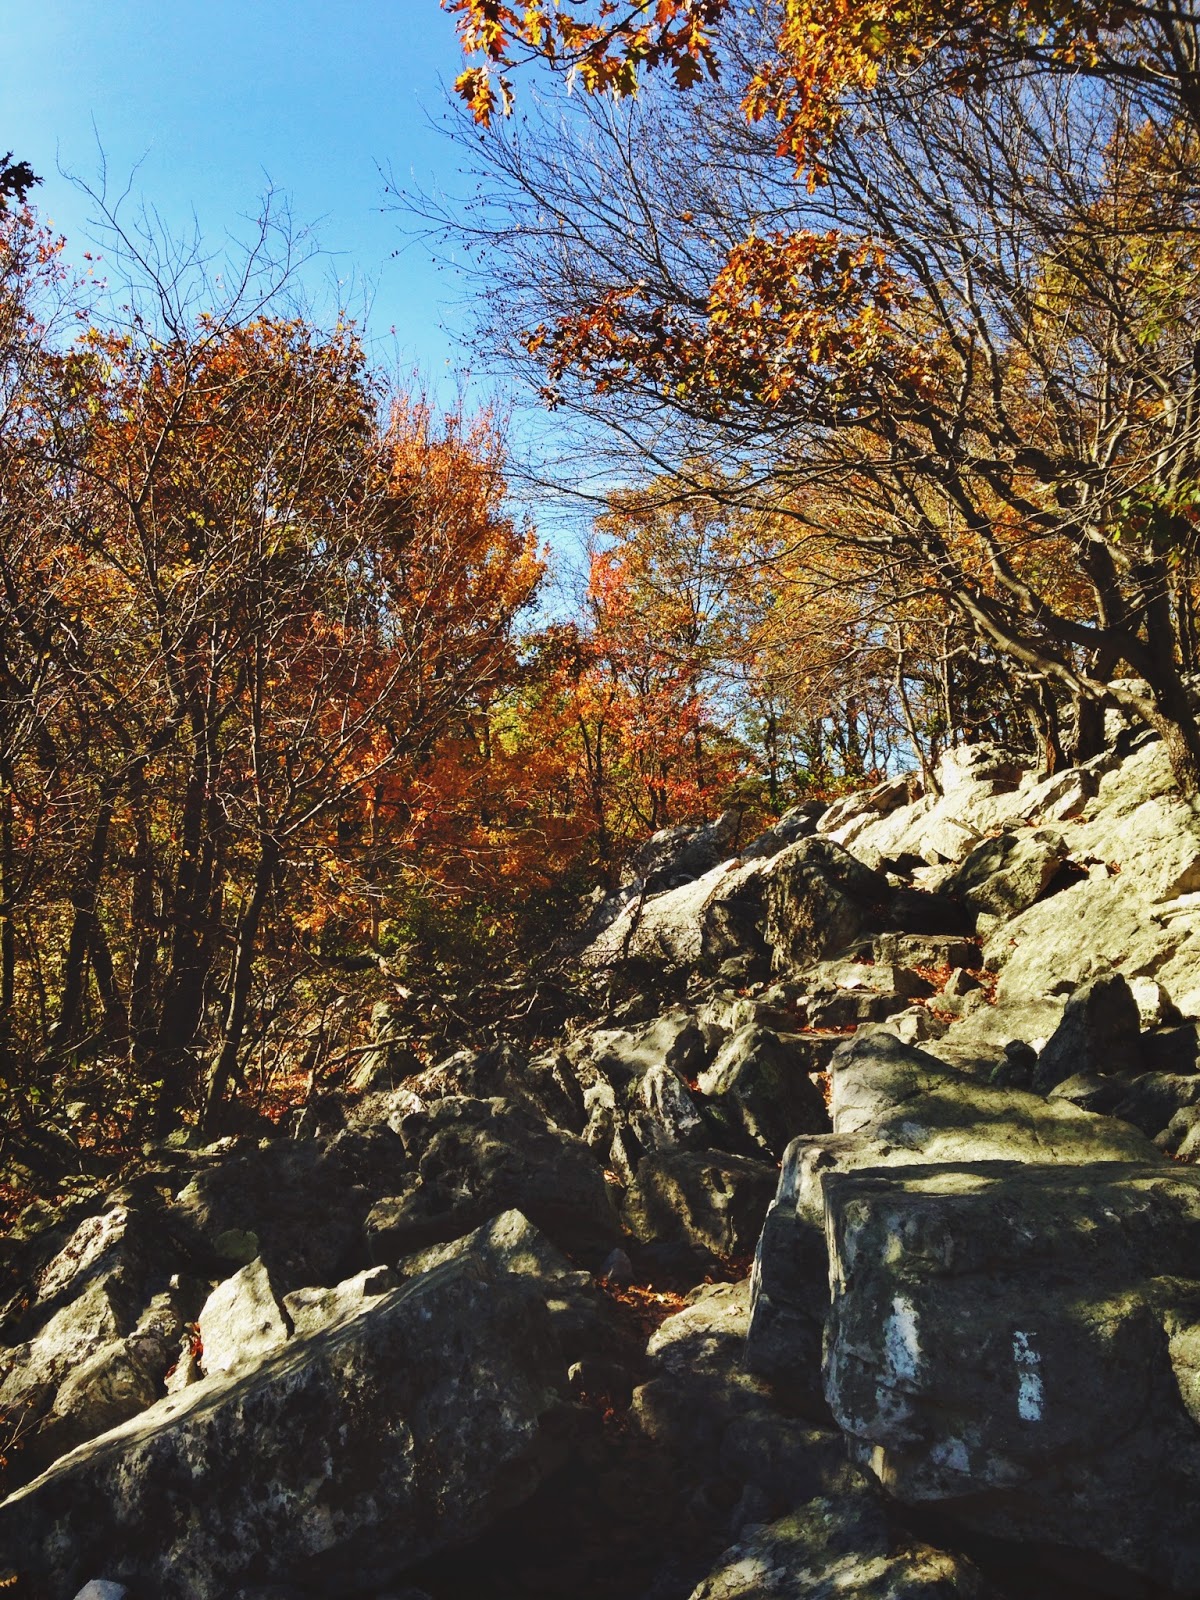 Hiking Pennsylvania: The Pinnacle and Pulpit Rock via the Appalachian Trail